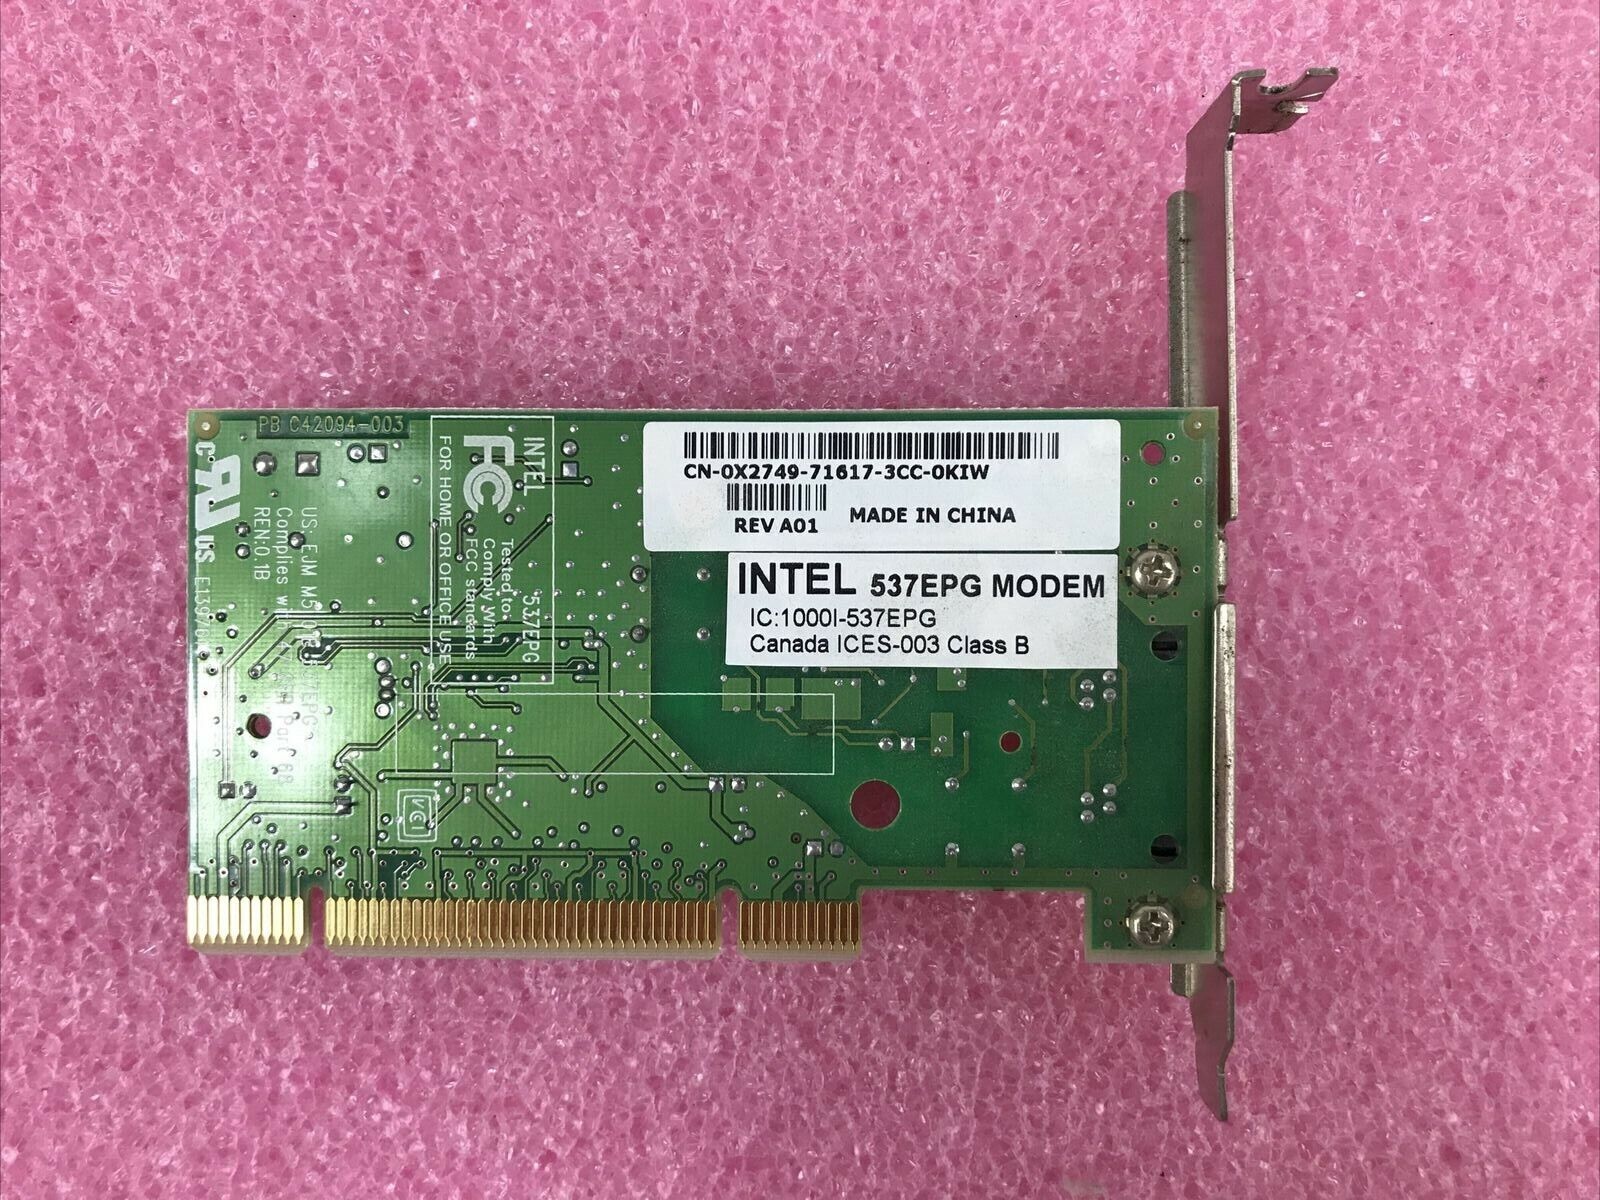 Intel 0X2749 Intel 537EPG 56K PCI Modem Card